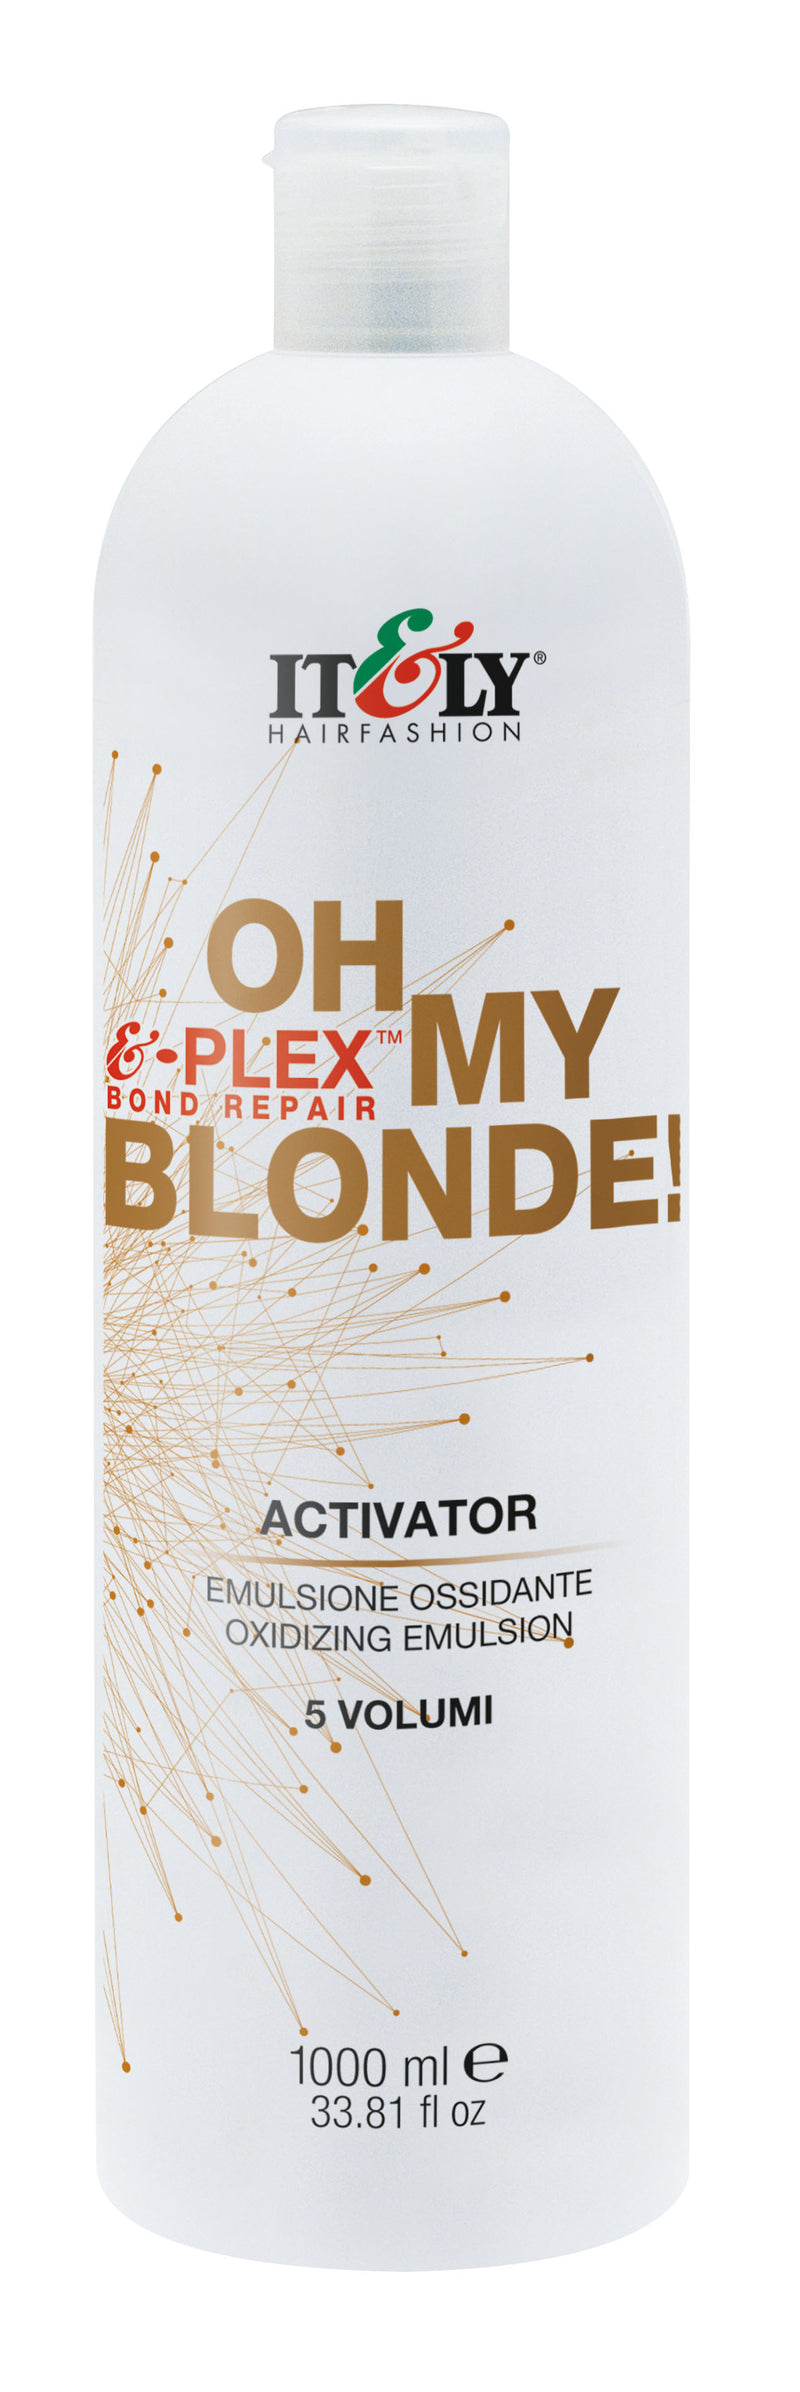 Oh My Blonde Activator 5 Vol 1000ml